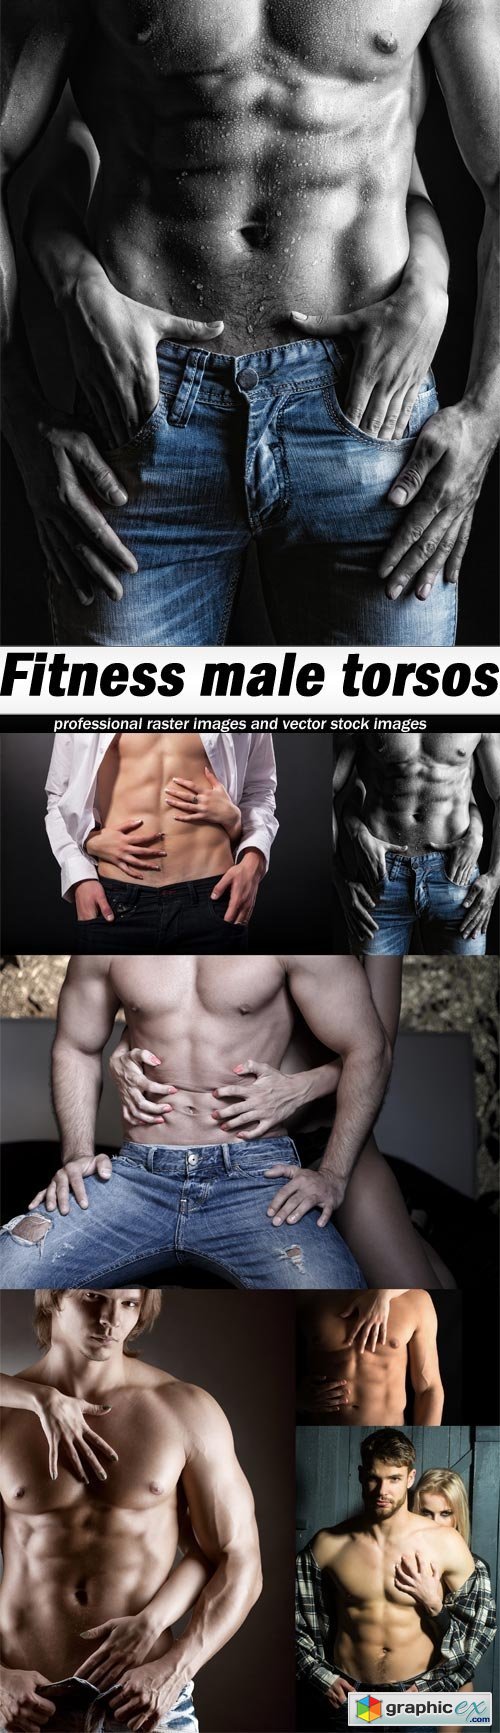 Fitness male torsos